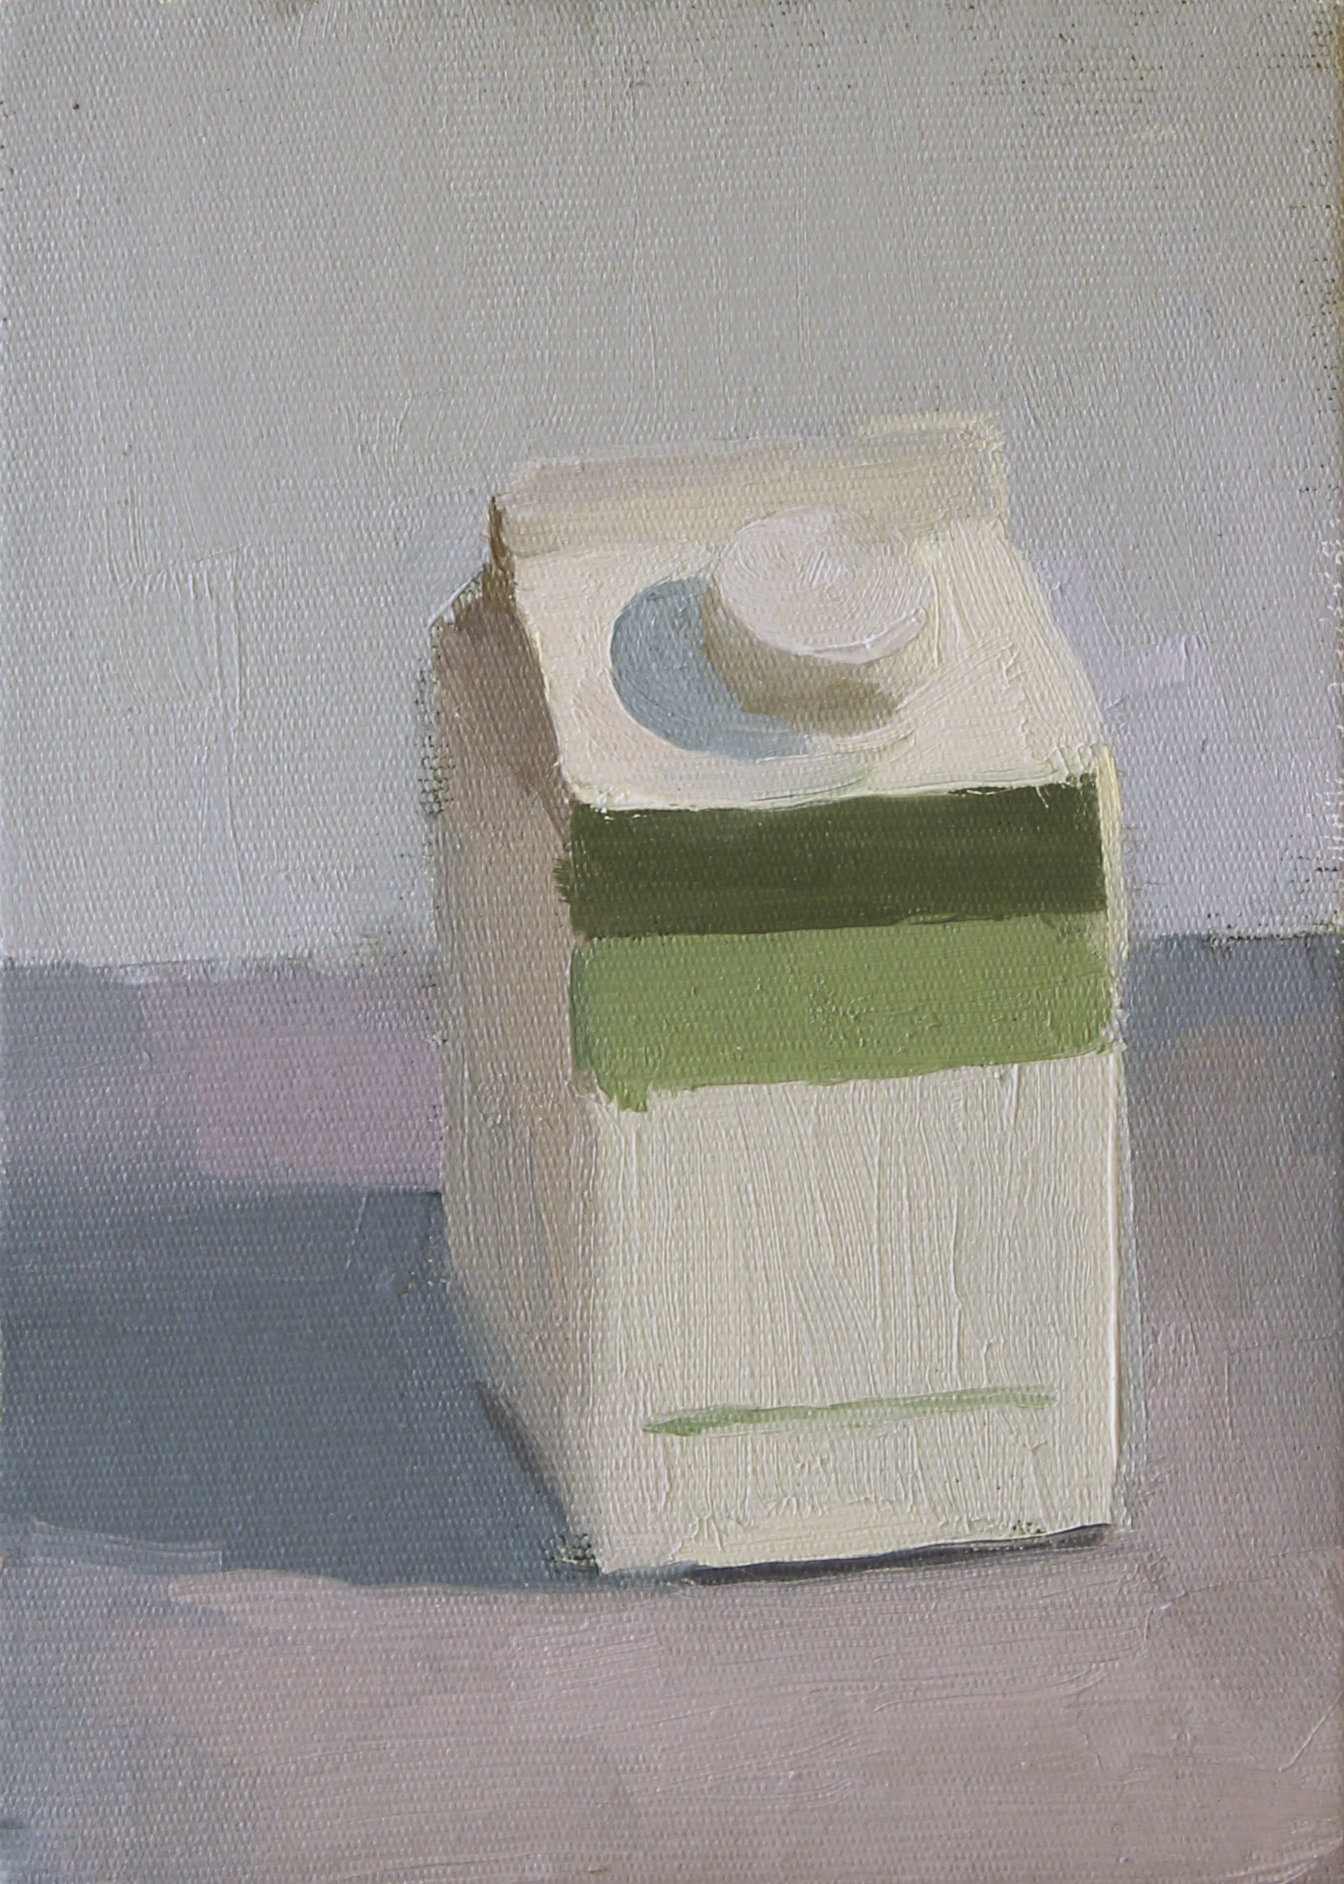    half &amp; half     oil on canvas 5x7" 2012  private collection 